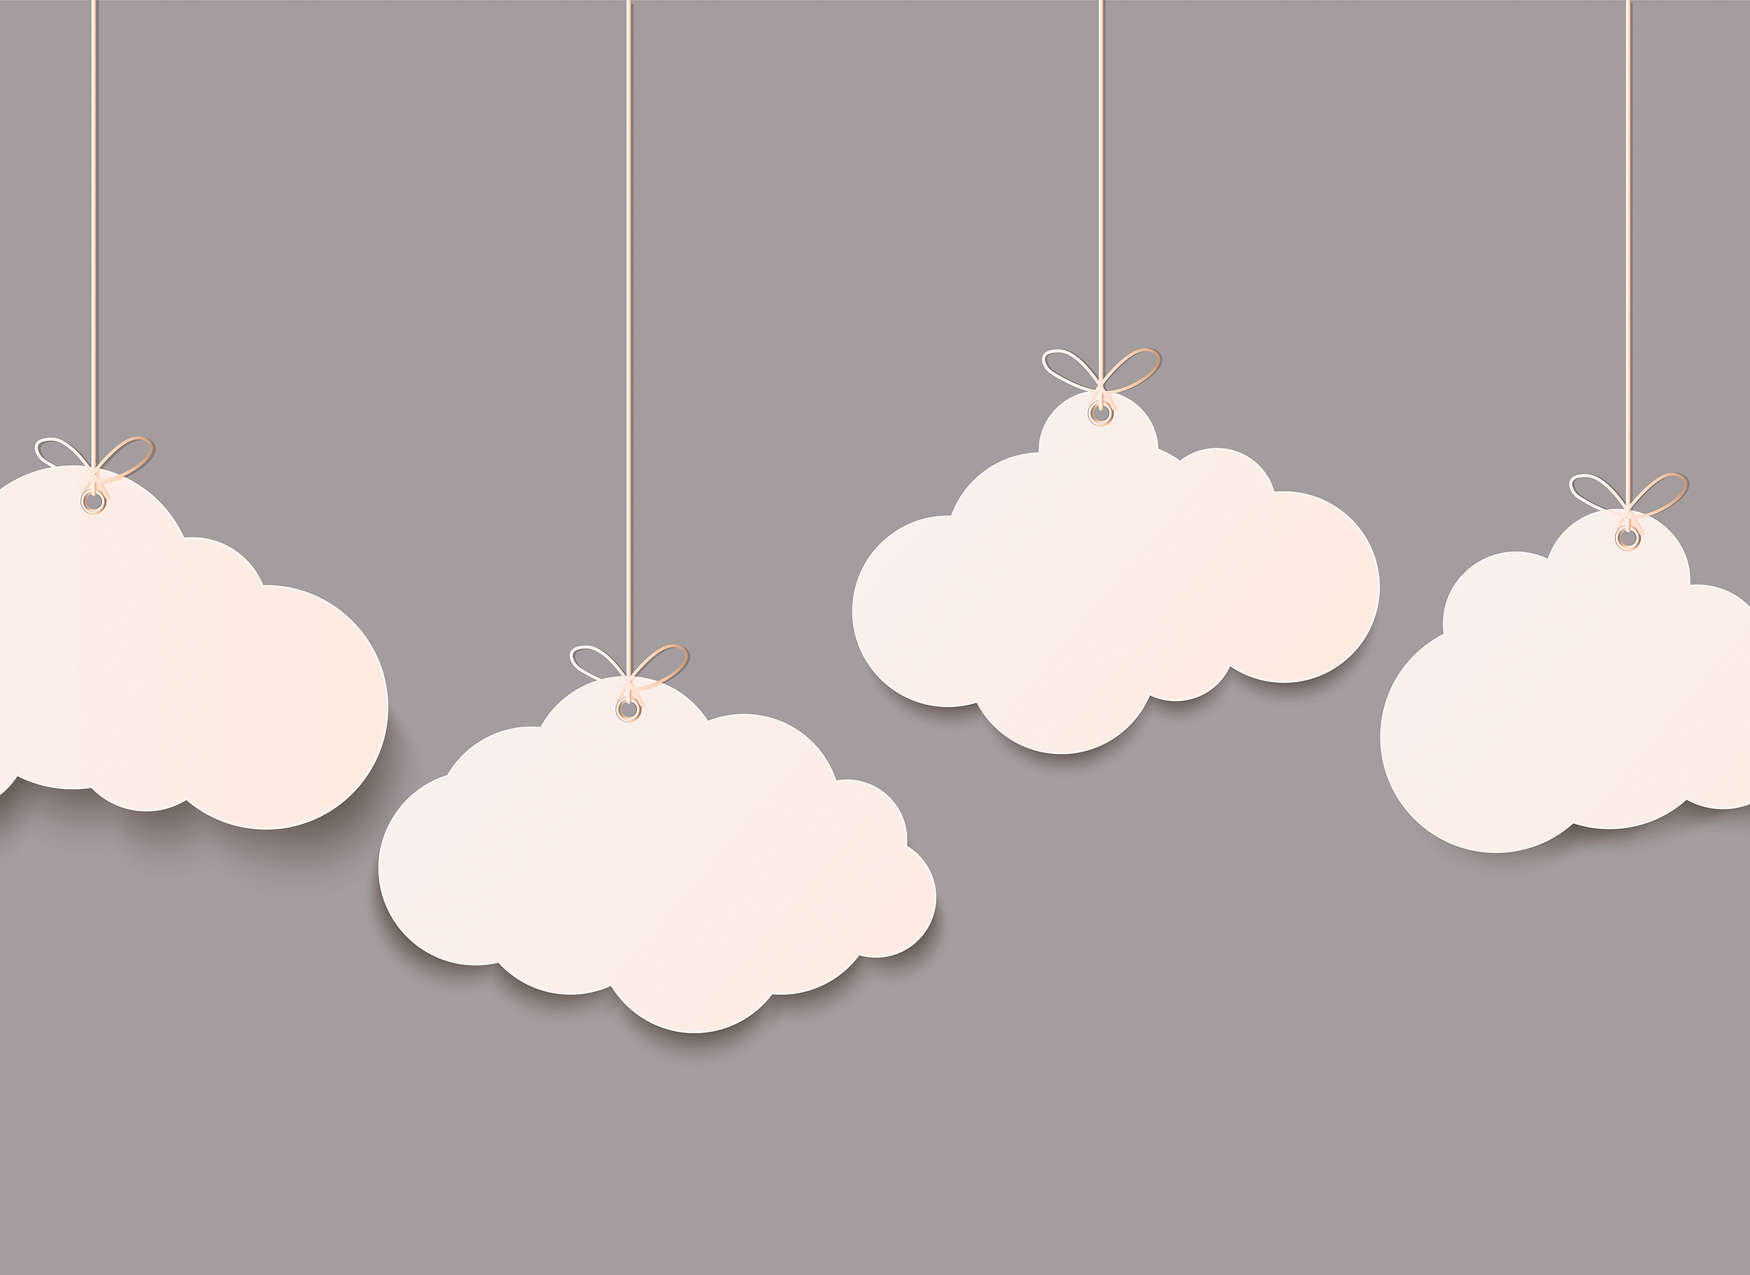             Kinderkamer Clouds Onderlaag behang - Grijs, Wit
        